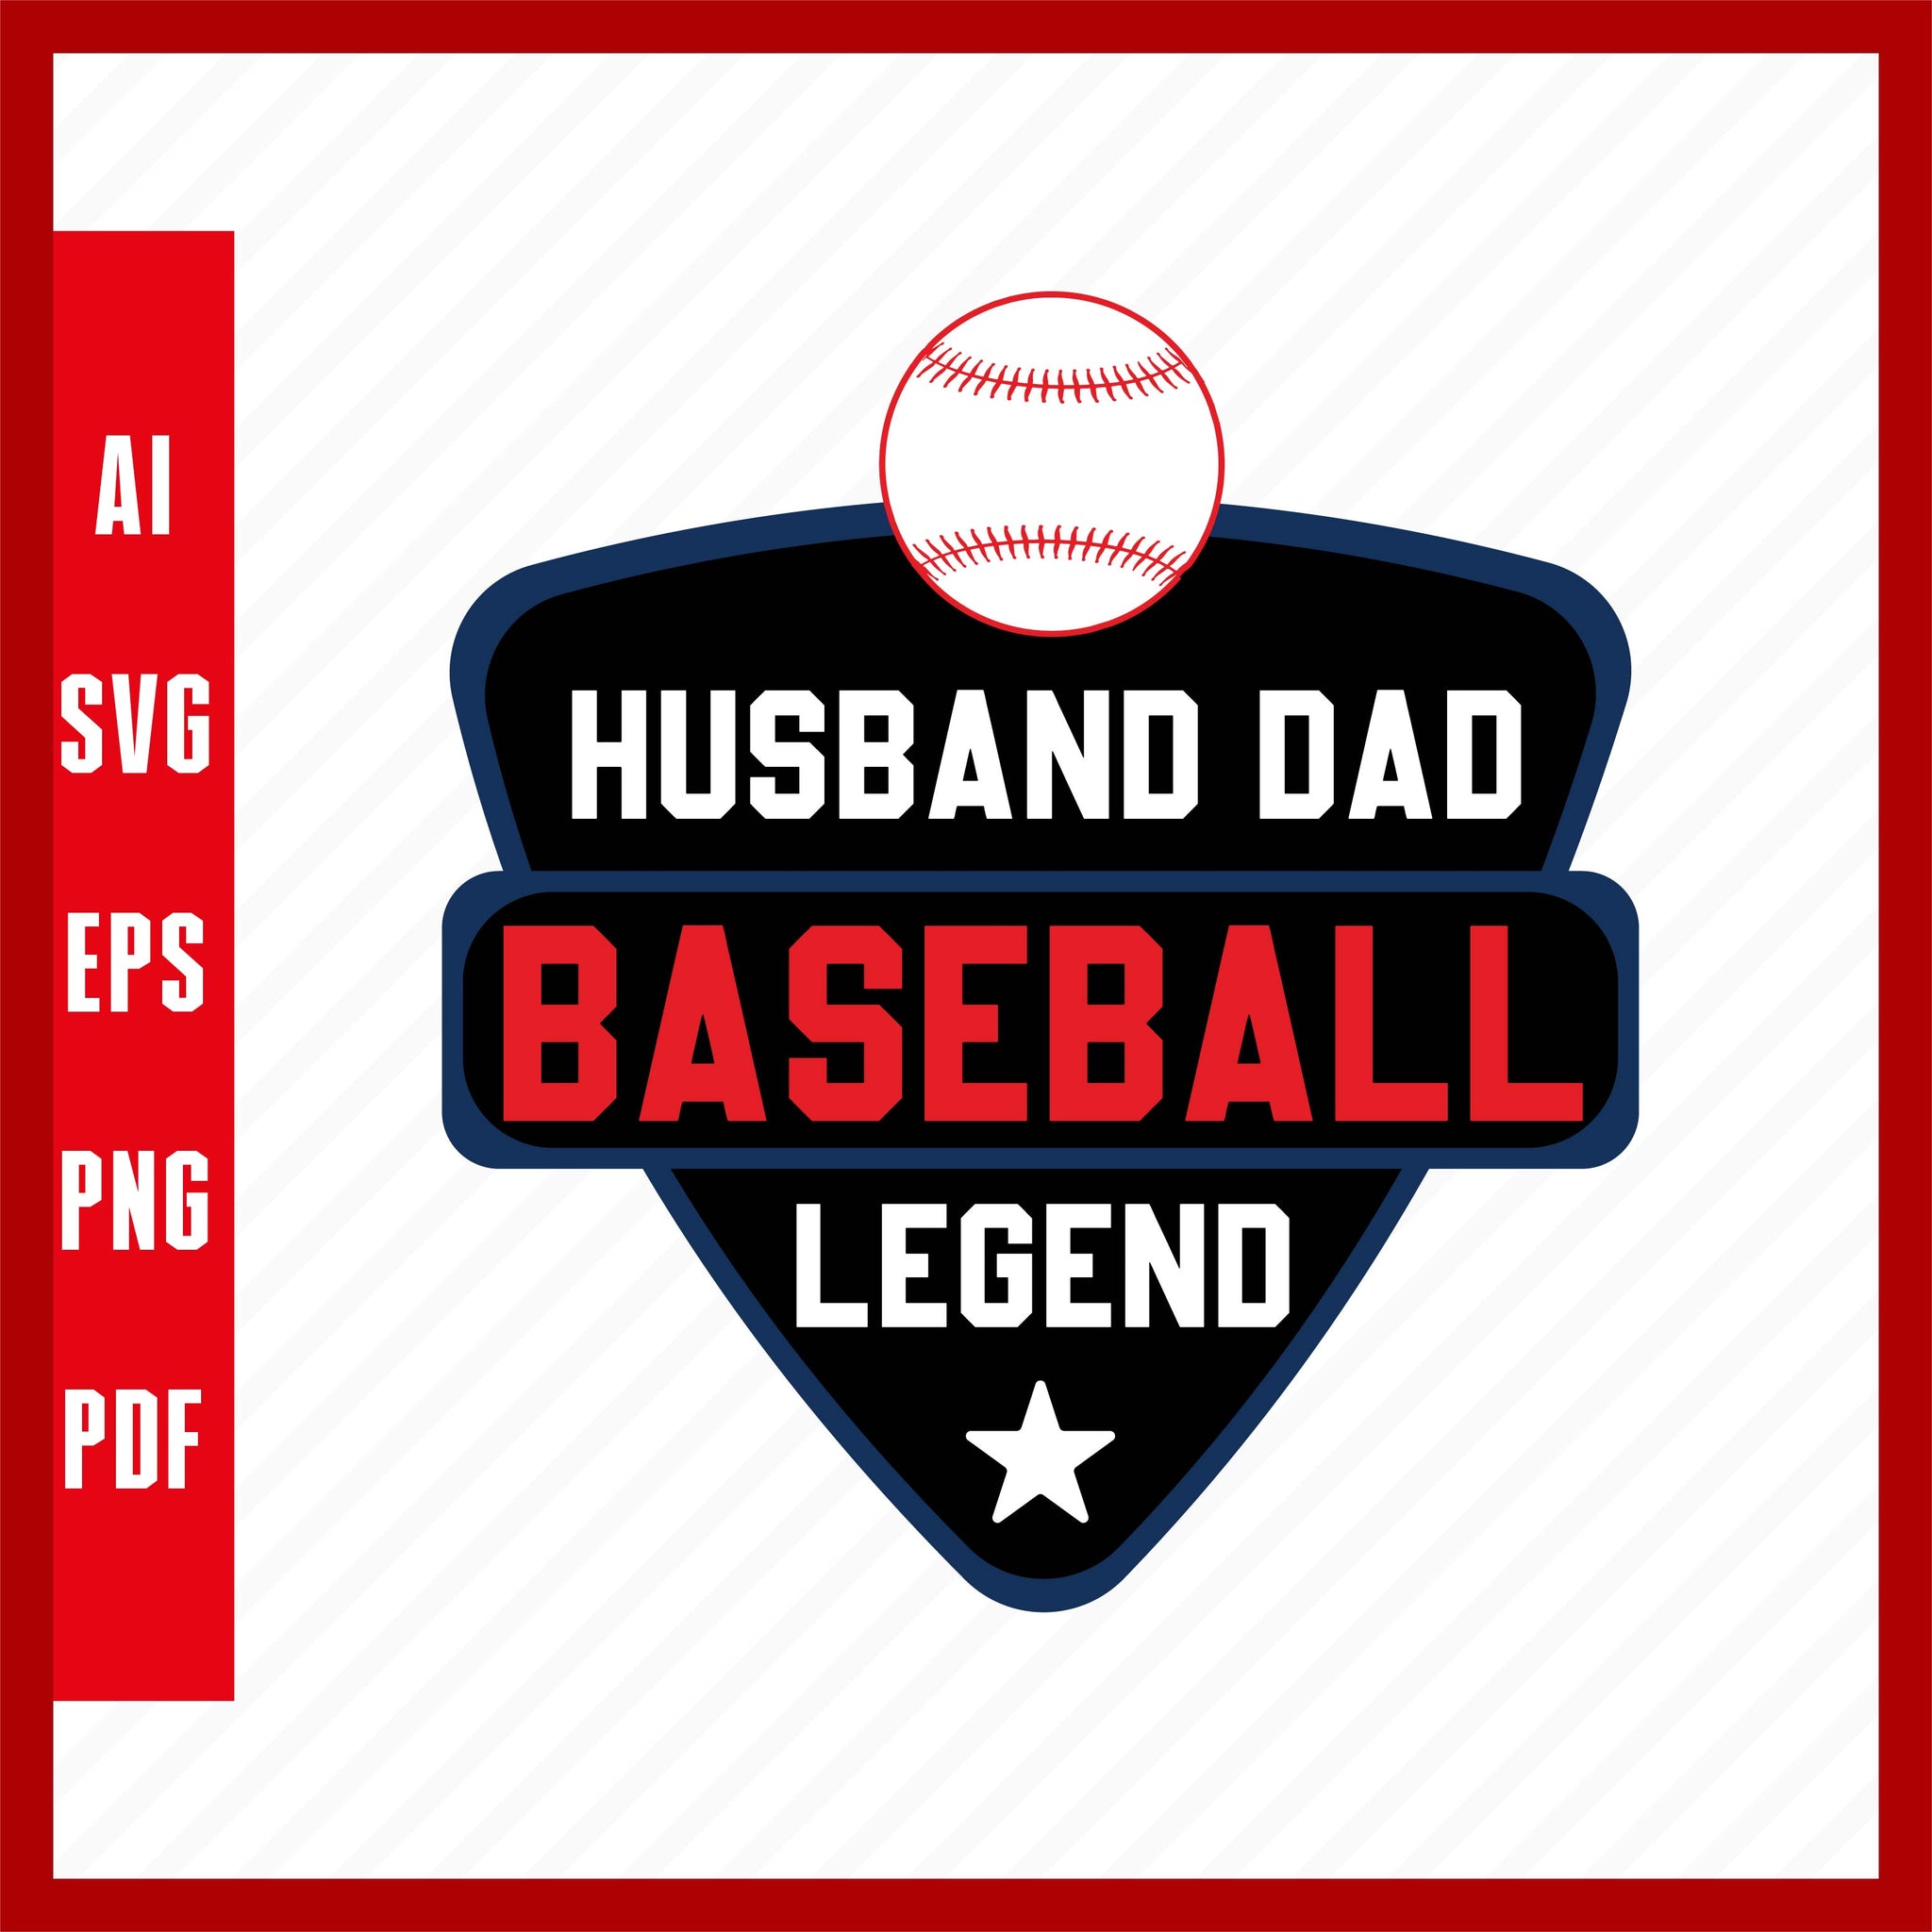 Husband Dad Baseball Legend, Baseball Lover T-Shirt Design Eps, Ai, Png, Svg and Pdf Printable Files